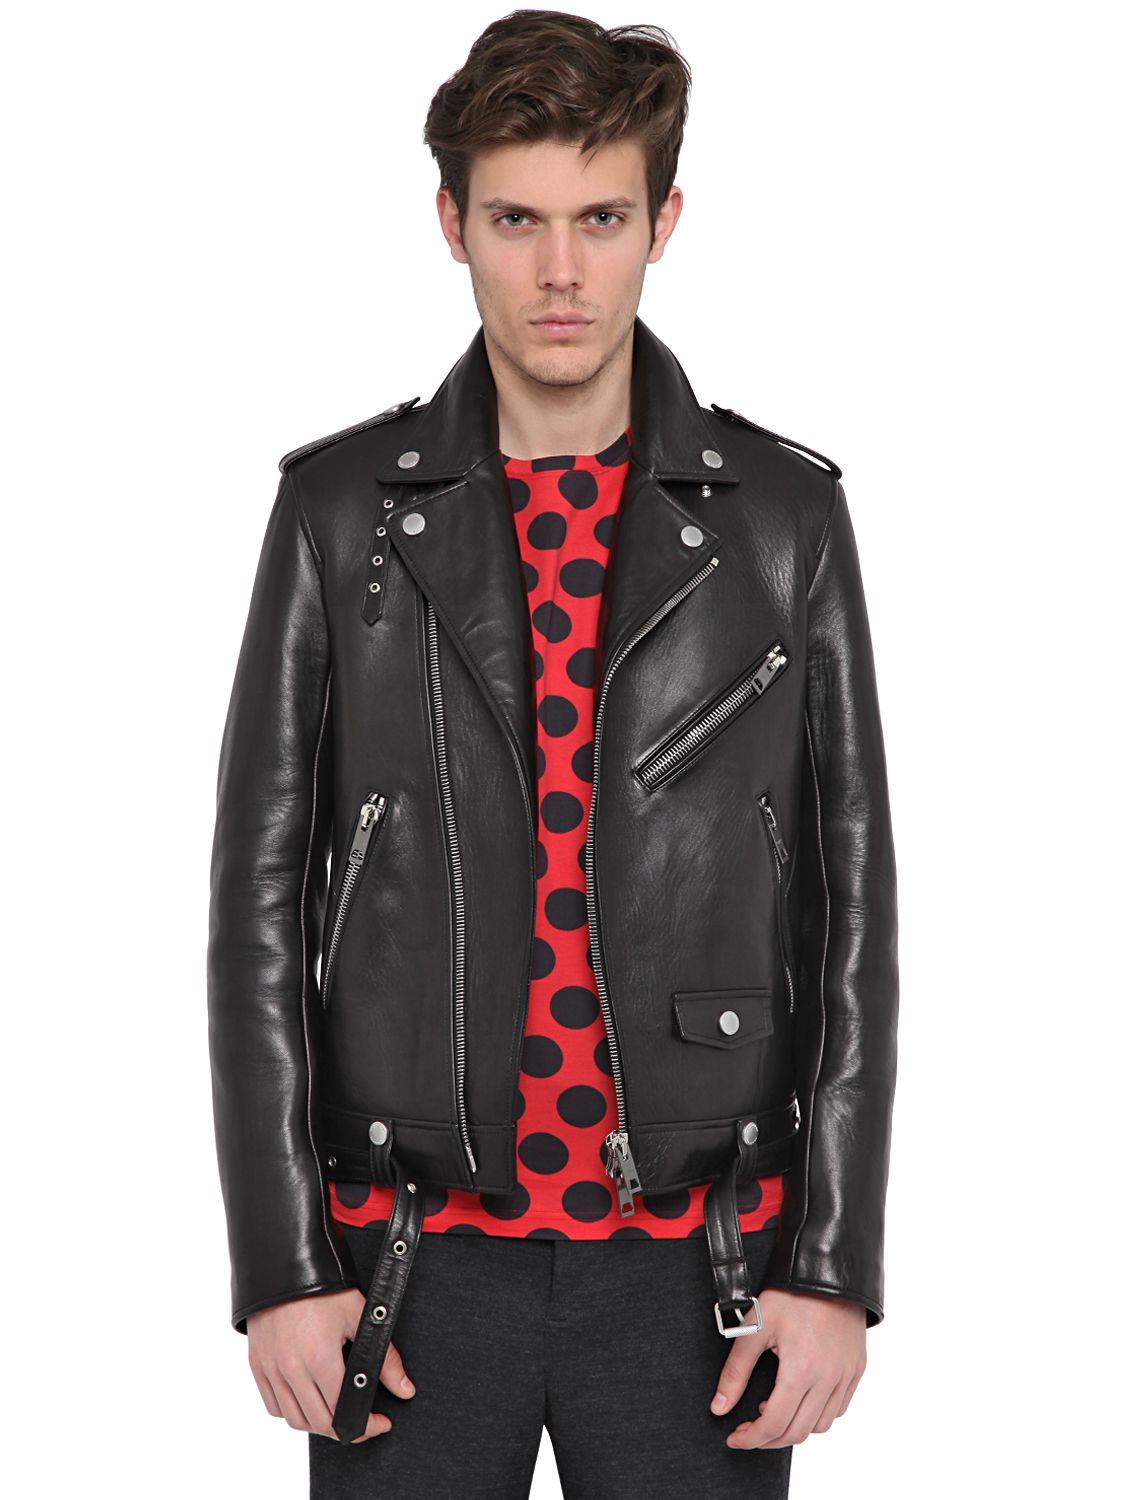 Burberry Prorsum Soft Leather Biker Jacket in Black for Men - Lyst